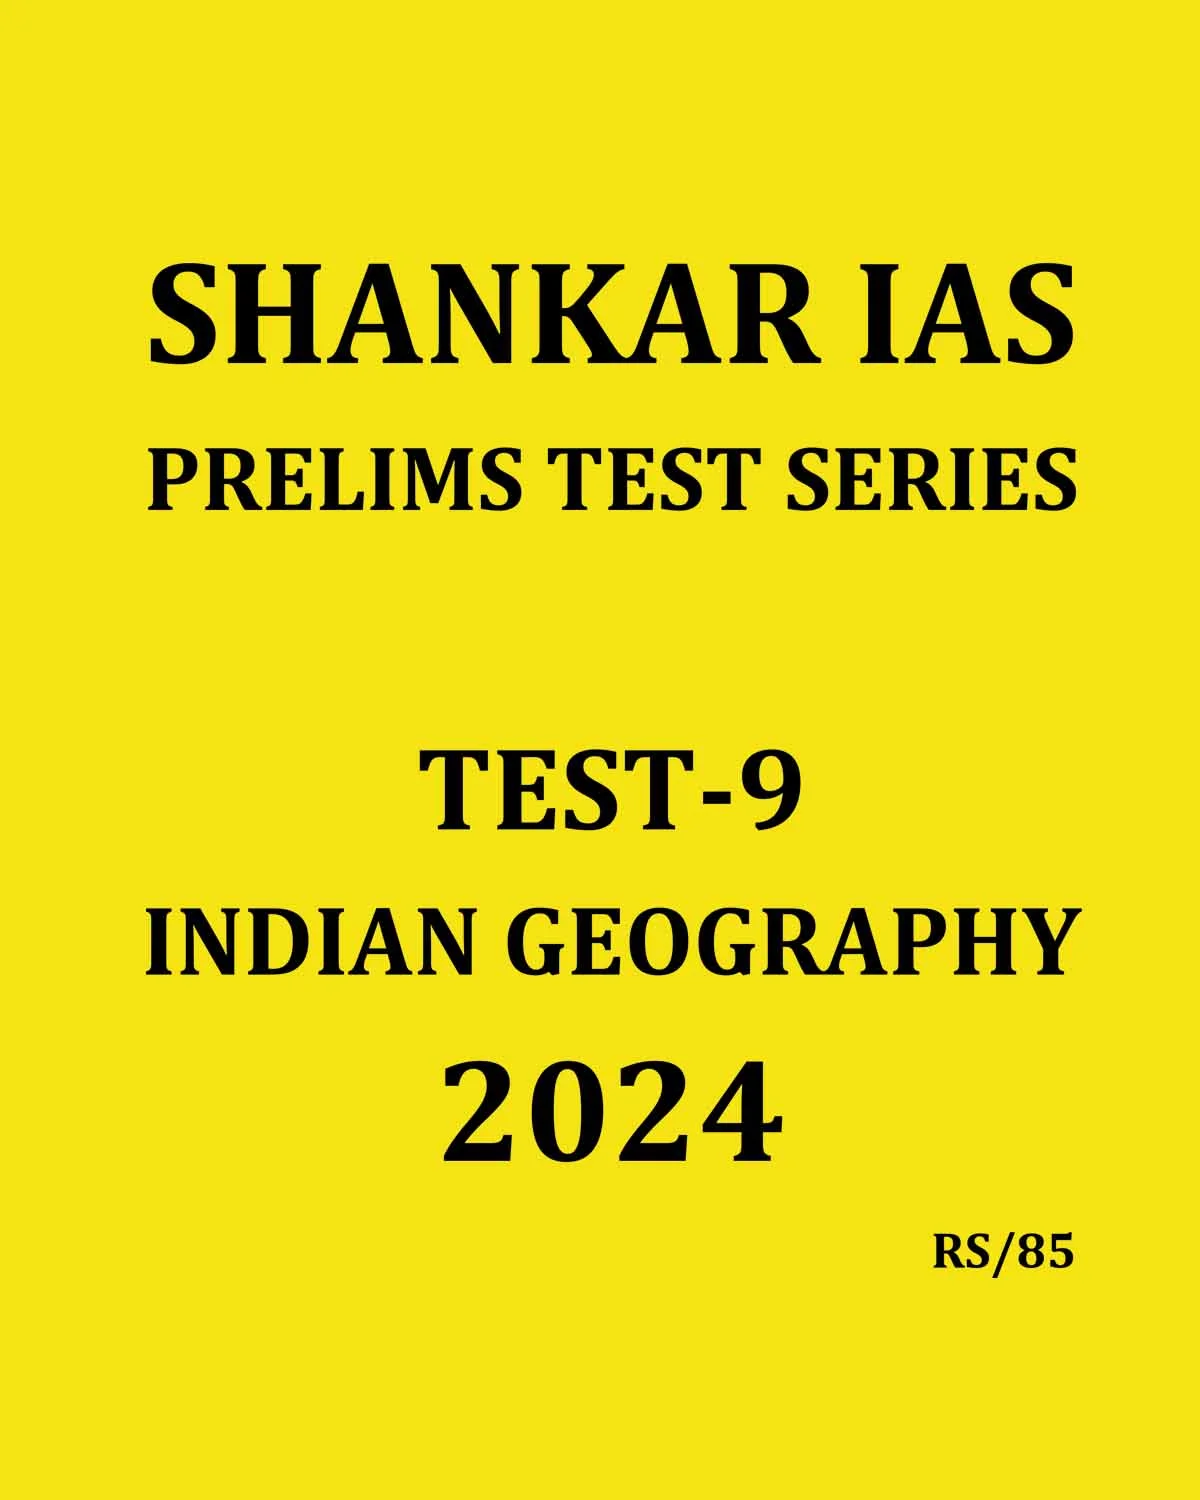 Manufacturer, Exporter, Importer, Supplier, Wholesaler, Retailer, Trader of Shankar IAS Prelims Test Series Test-9 Indian Geography 2024 English Medium (Black & White) in New Delhi, Delhi, India.